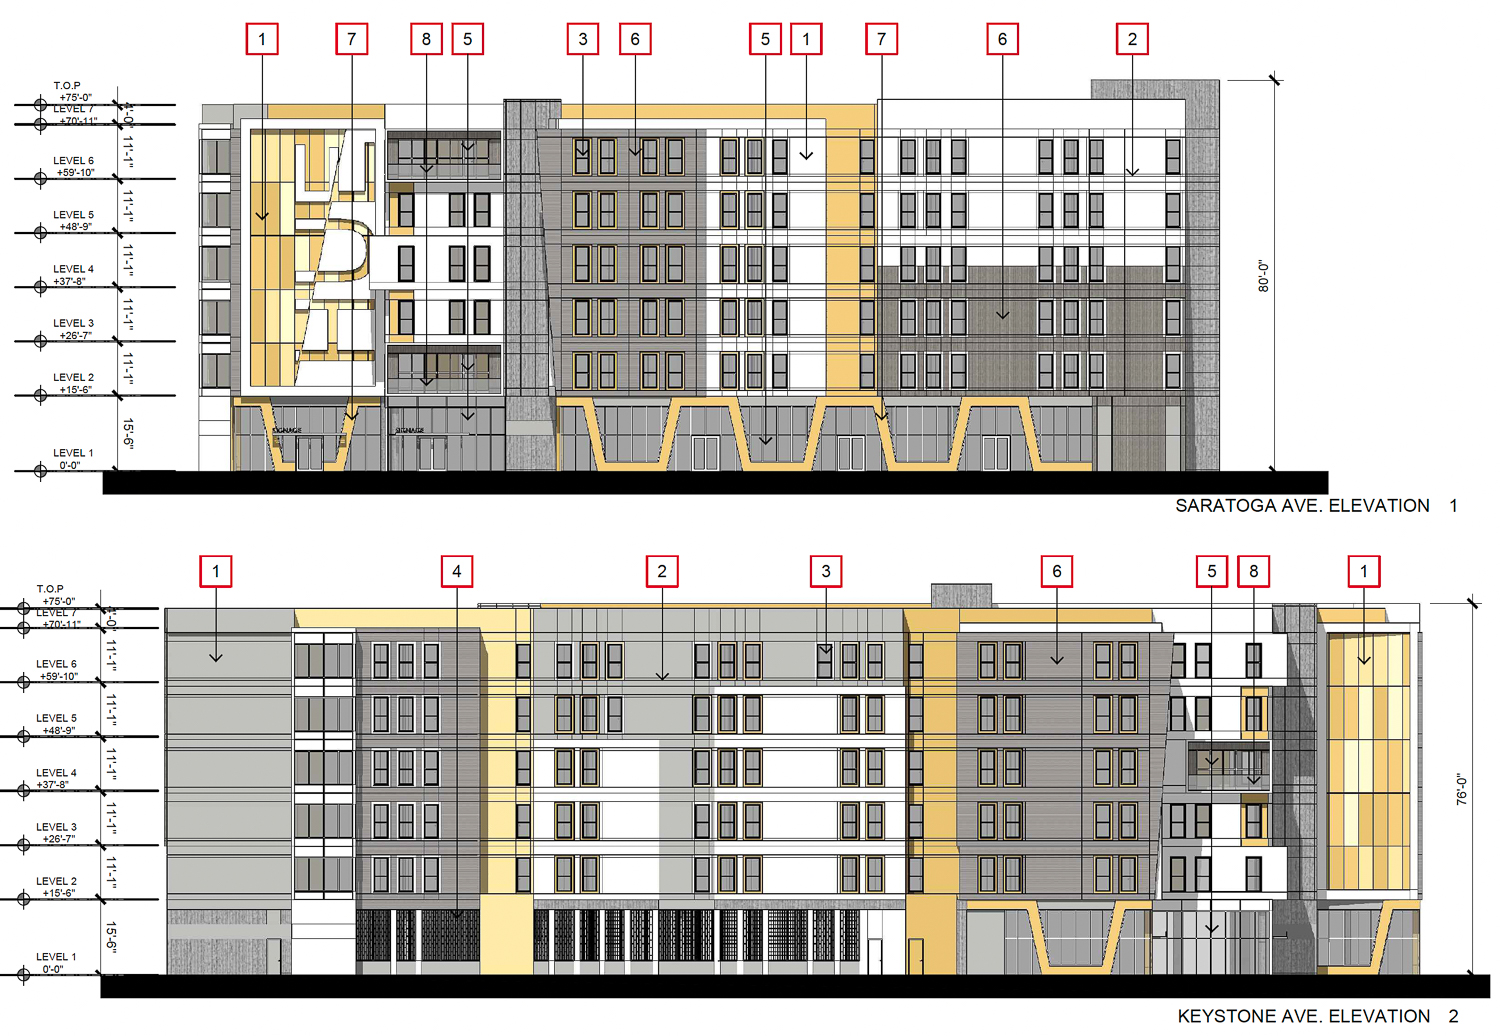 80 Saratoga Avenue facade elevations overlooking Saratoga and Keystone Avenue, elevation by Architects Orange